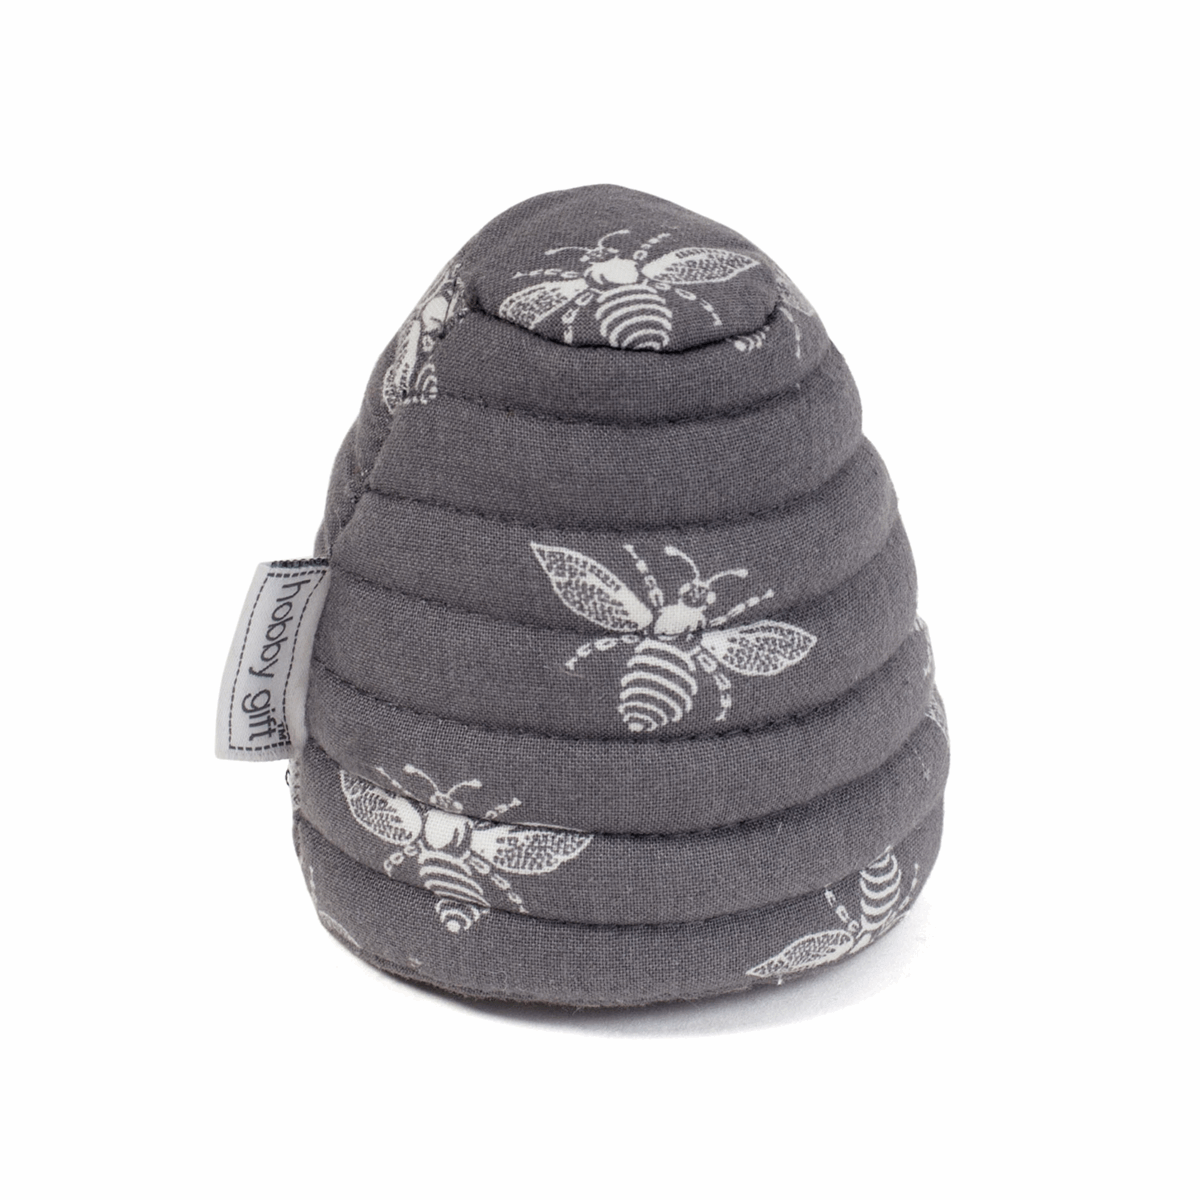 Grey Honeybee bee hive Handmade pin cushion. Great sewing pincushion gift.